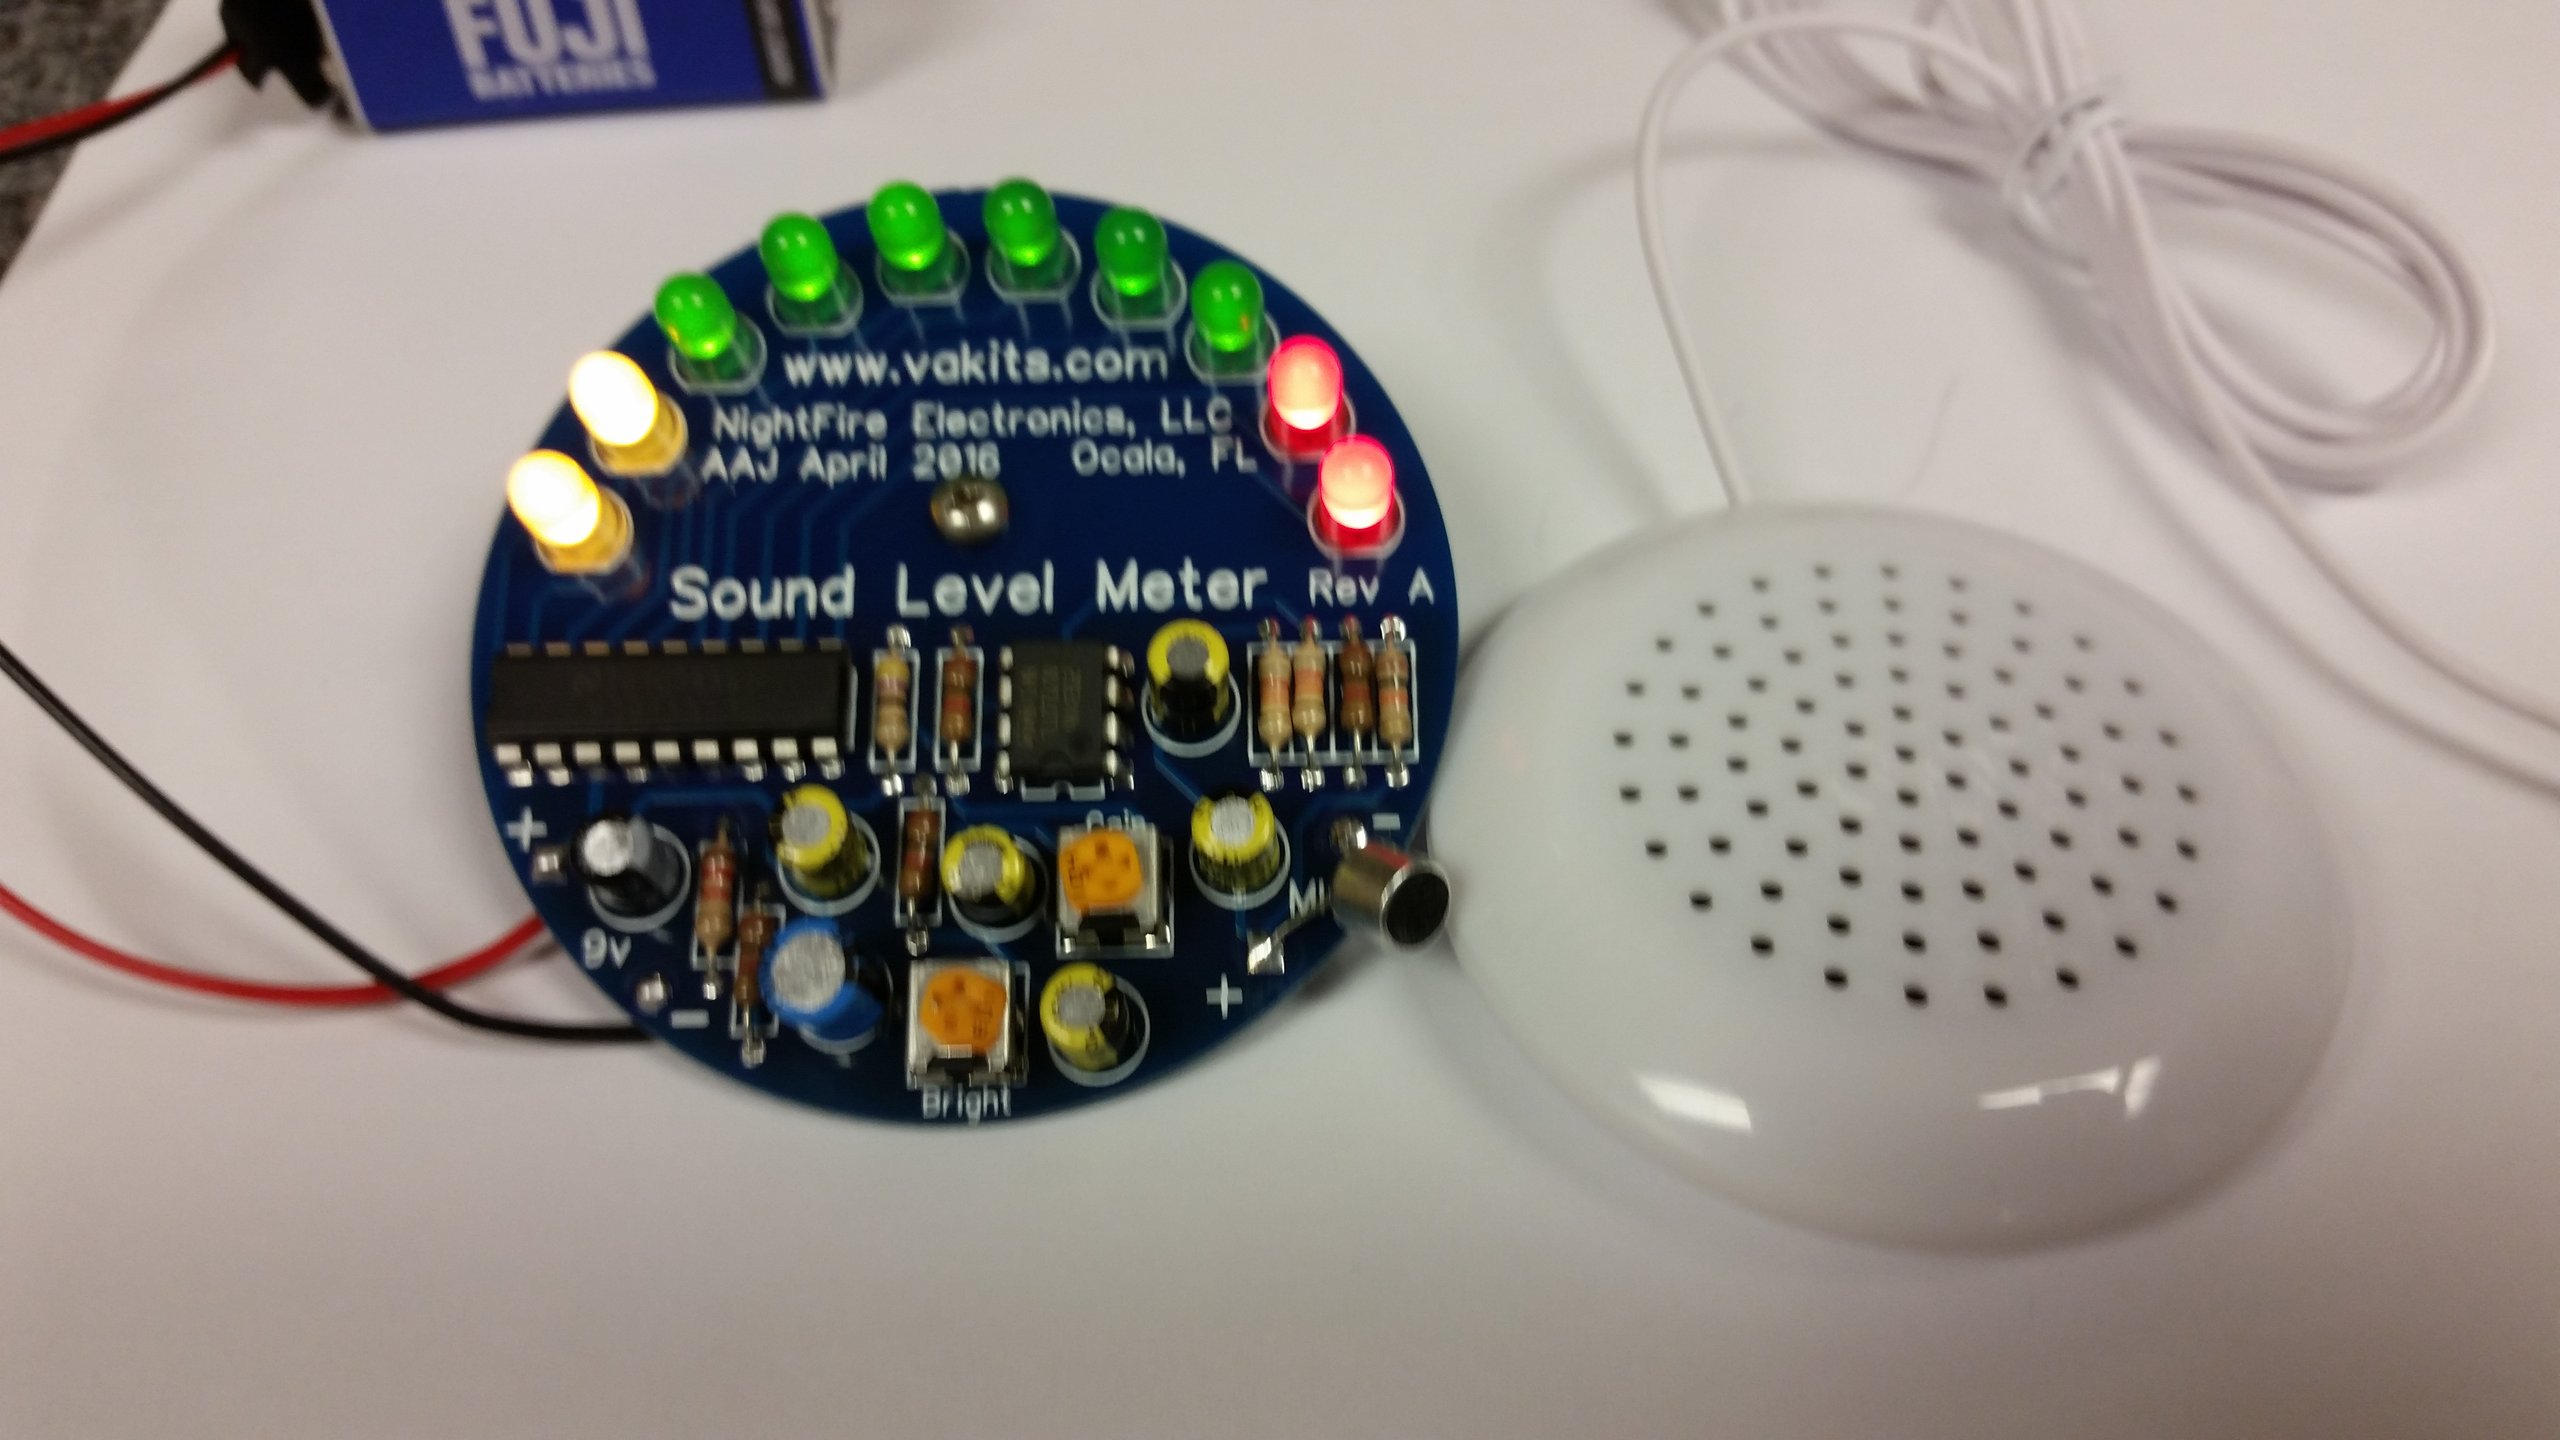 LED Sound Level Meter Kit from nfceramics on Tindie